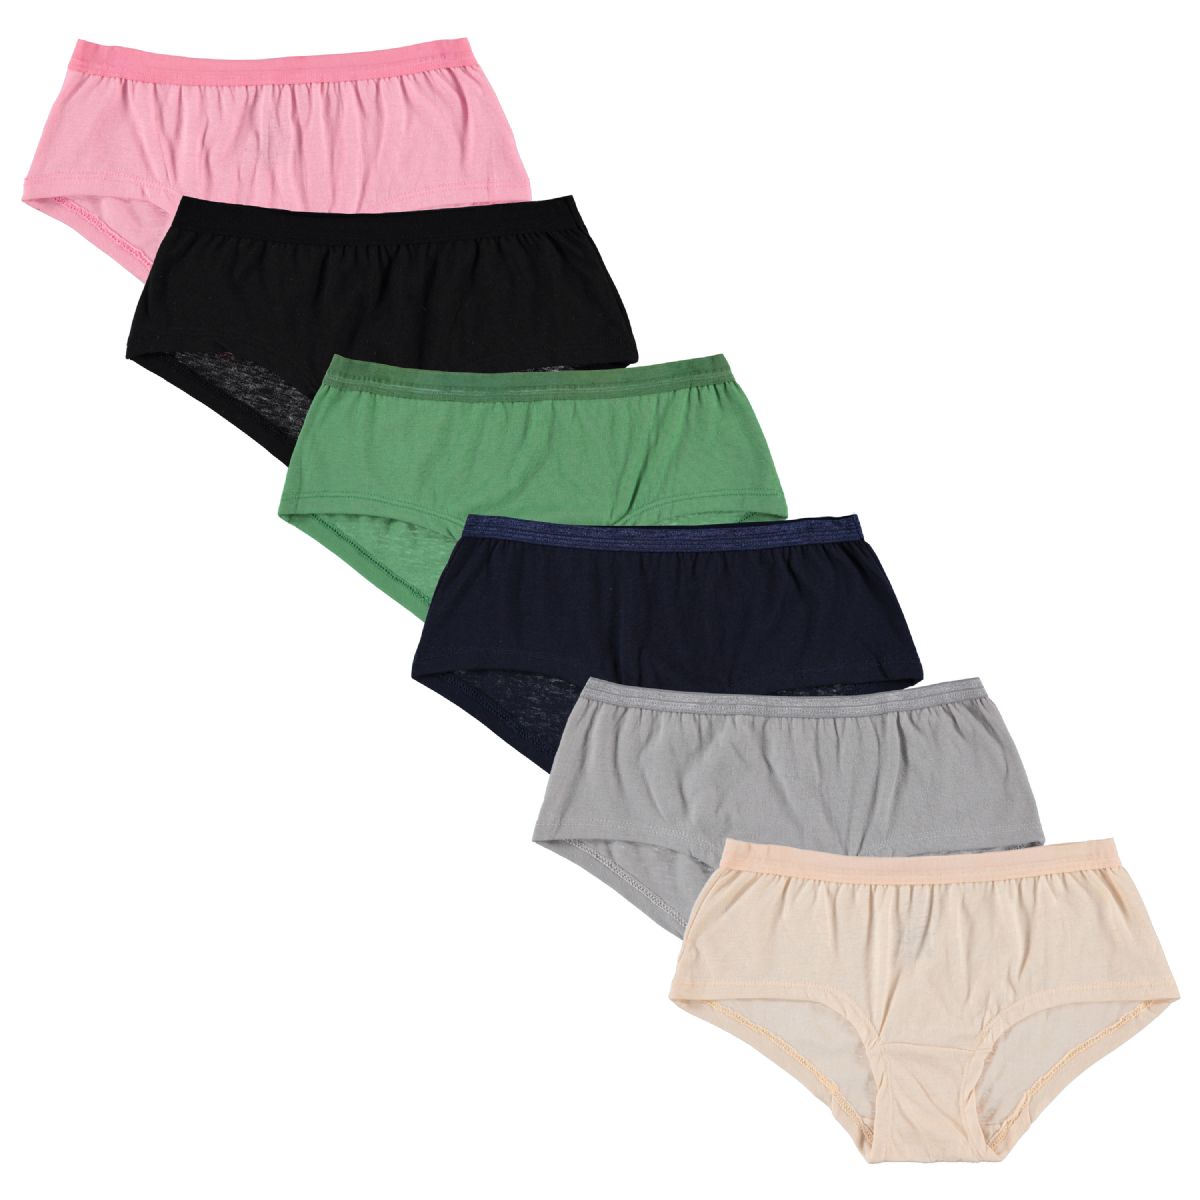 180 Bulk Yacht & Smith Womens Assorted Color Underwear, Panties In Bulk, 95% Cotton - Size 2XL